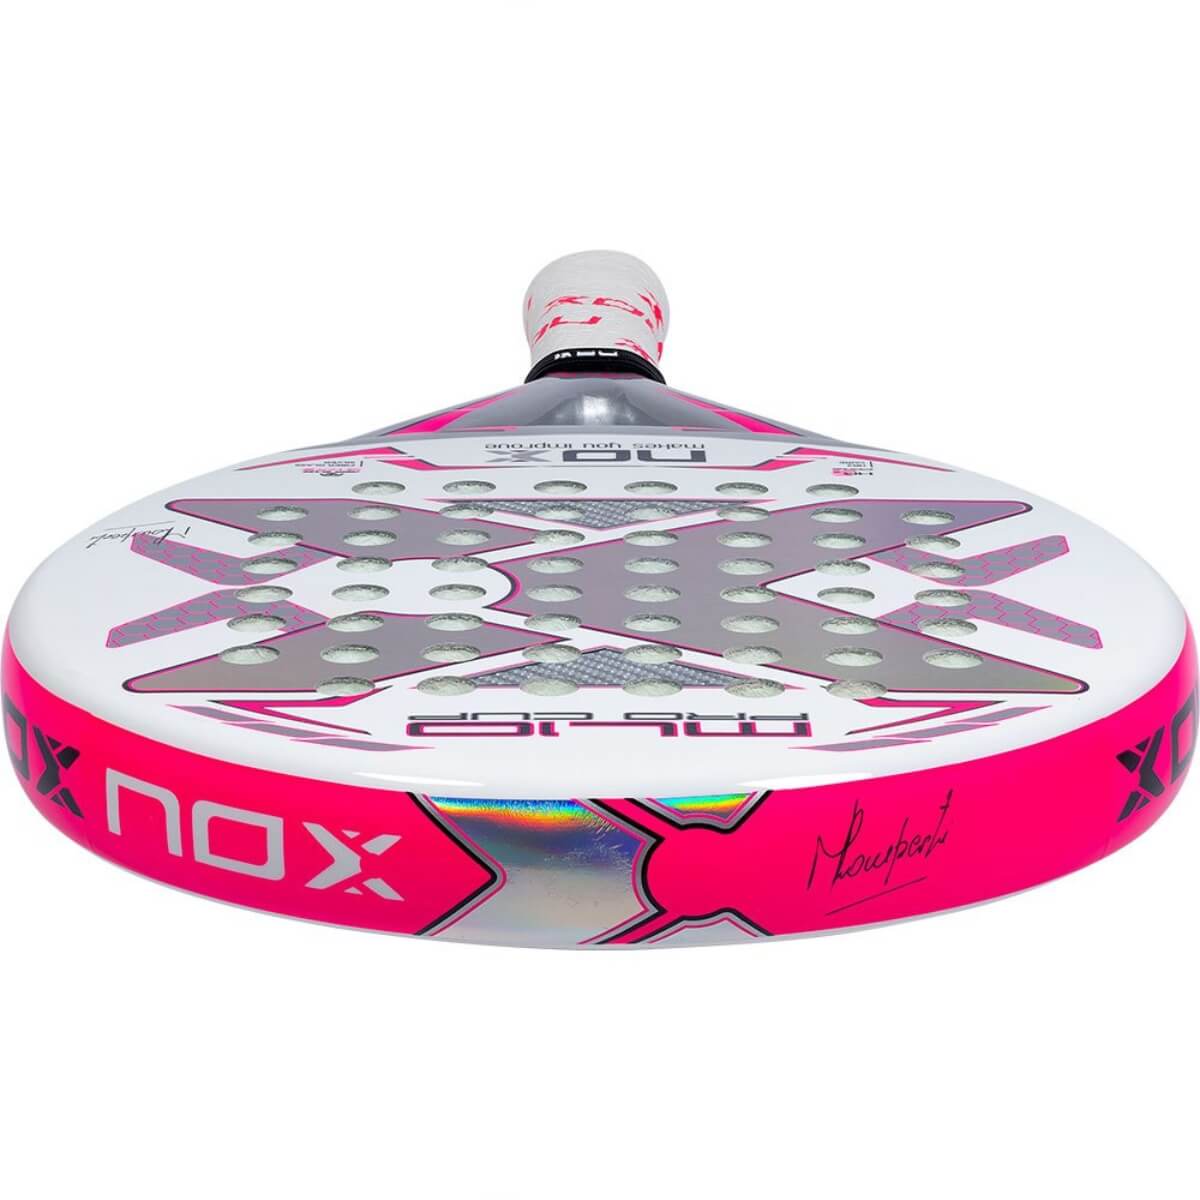 Nox ML10 Pro Cup Silver padel racket bovenaanzicht